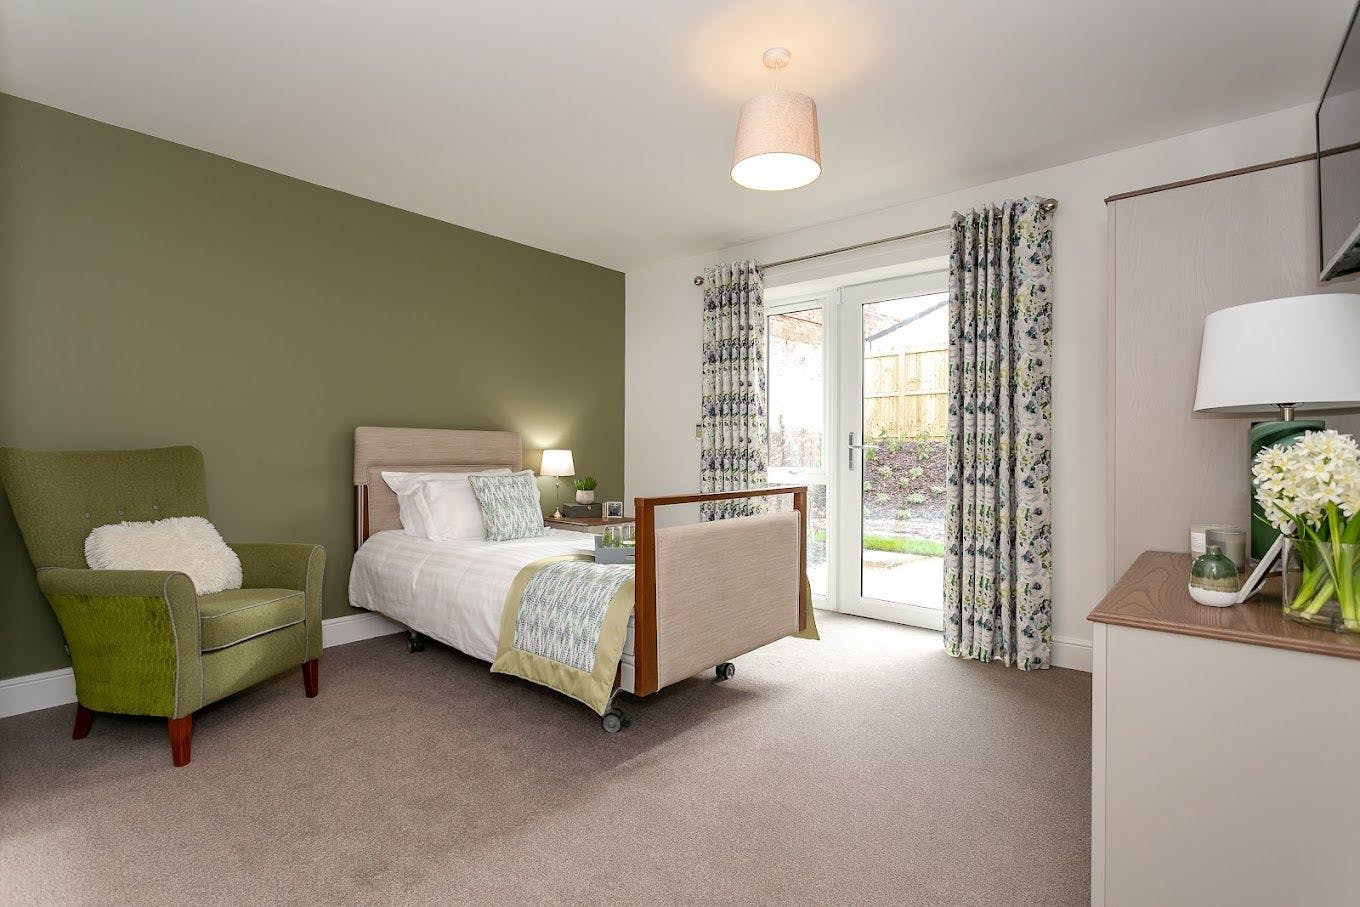 Bedroom of Harcourt Gardens care home in Harrogate, Yorkshire